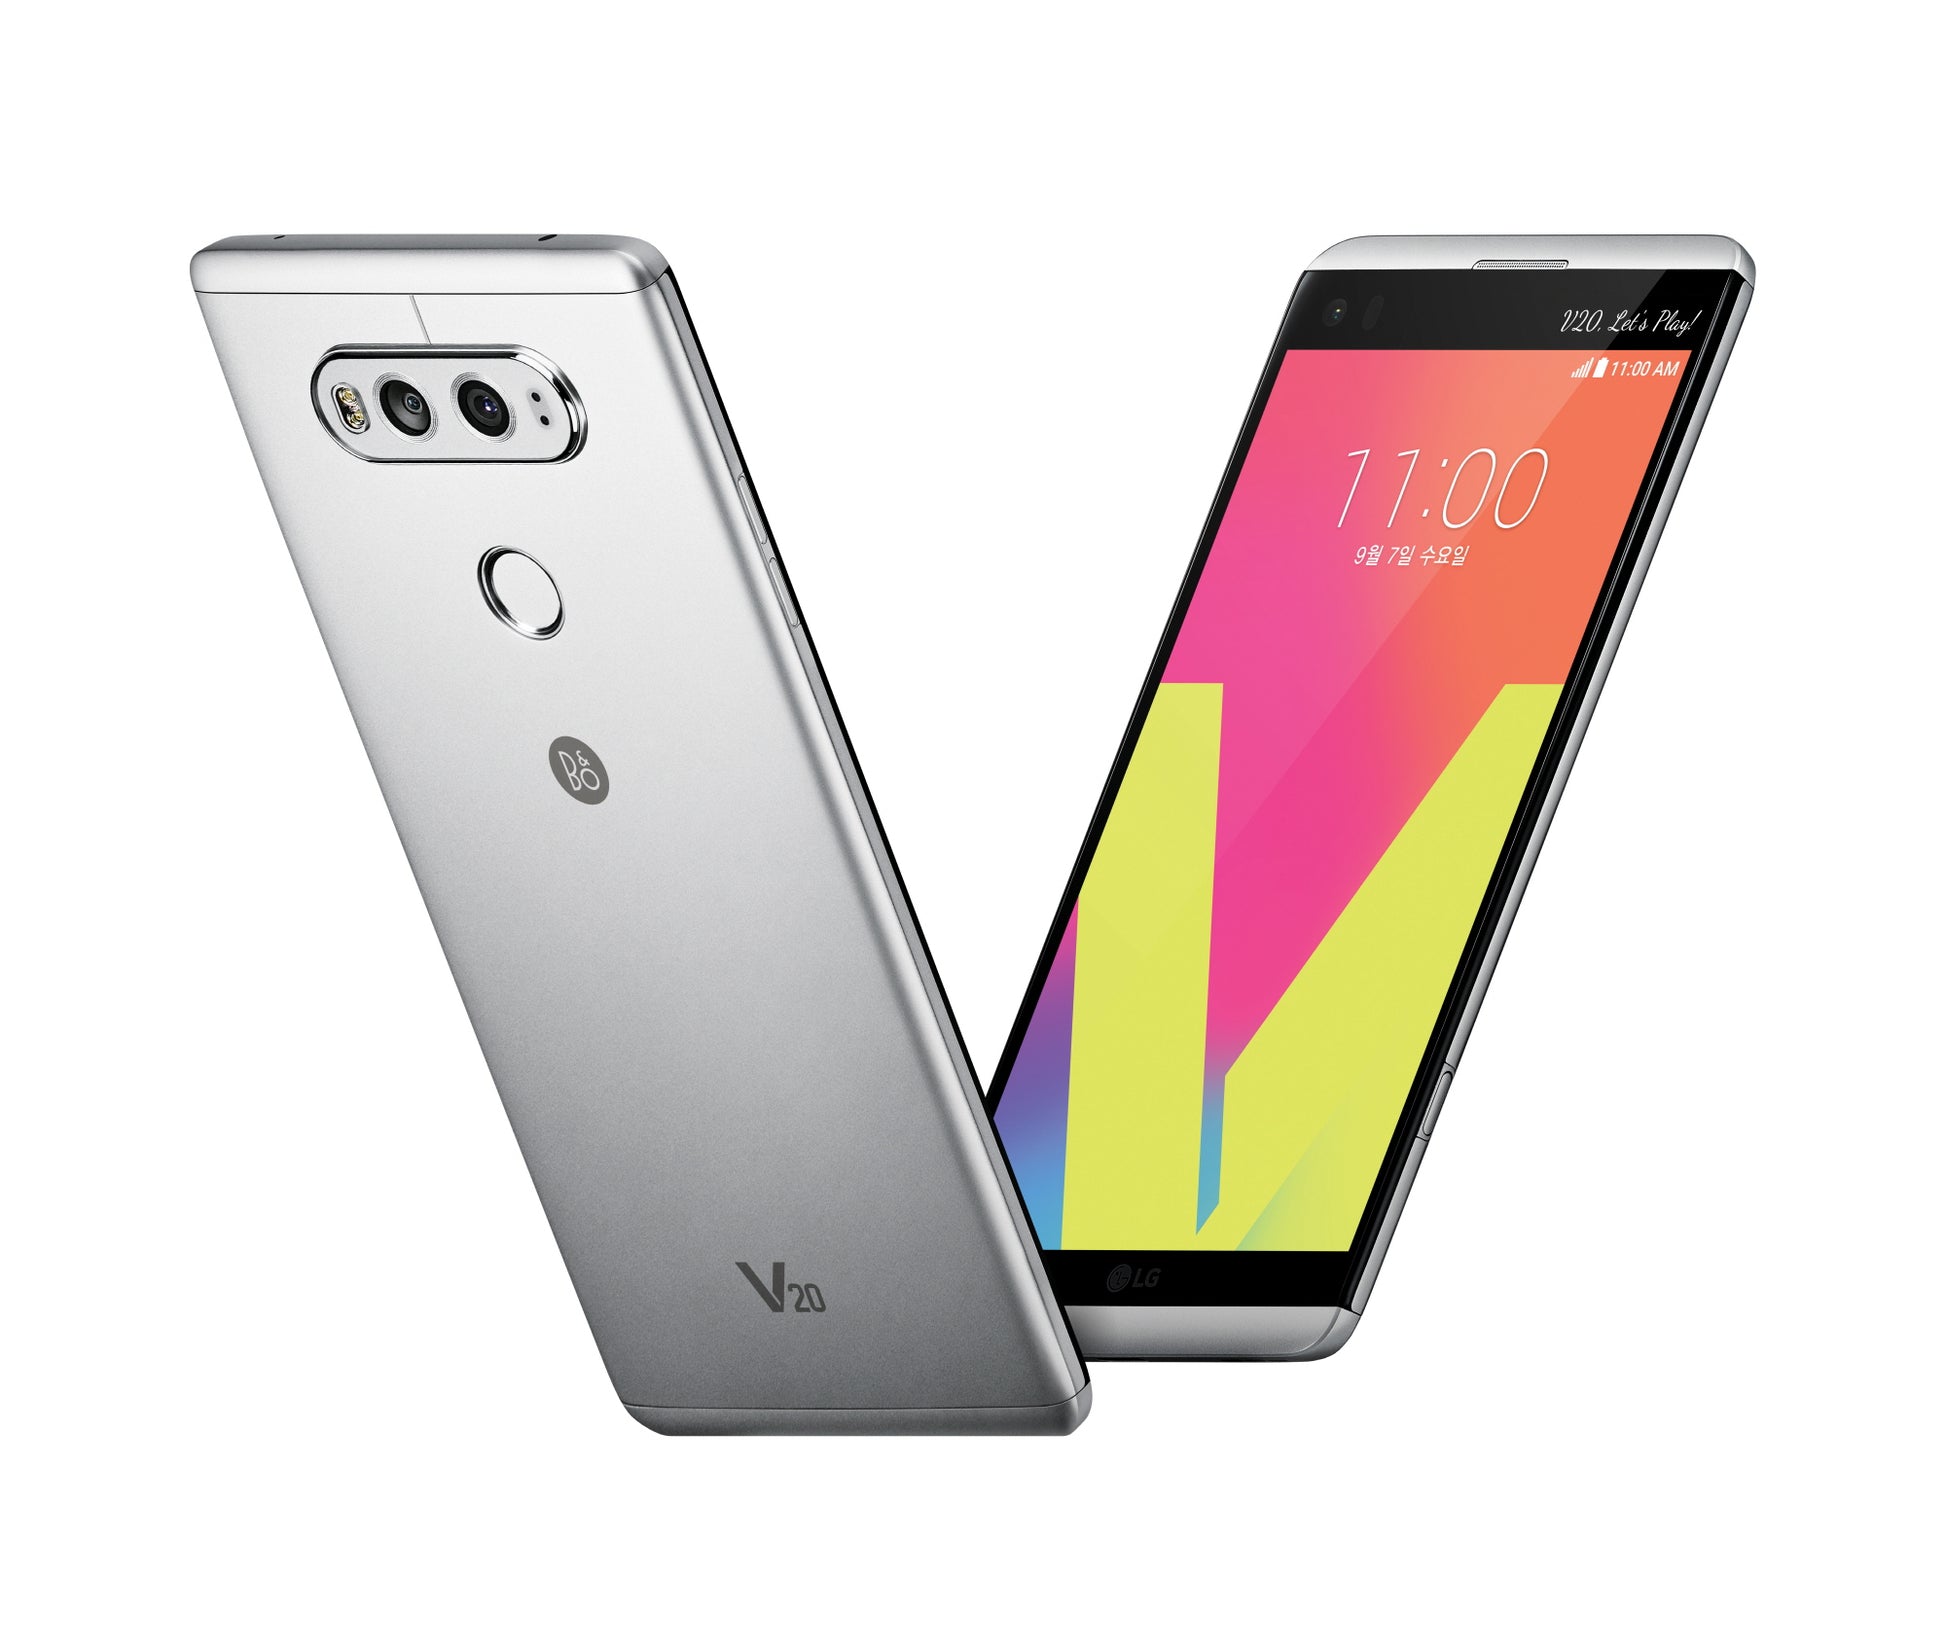 LG  V20  32Gb / 4Gb Ram / 16Mp / 3200 mAh Android apple saynama